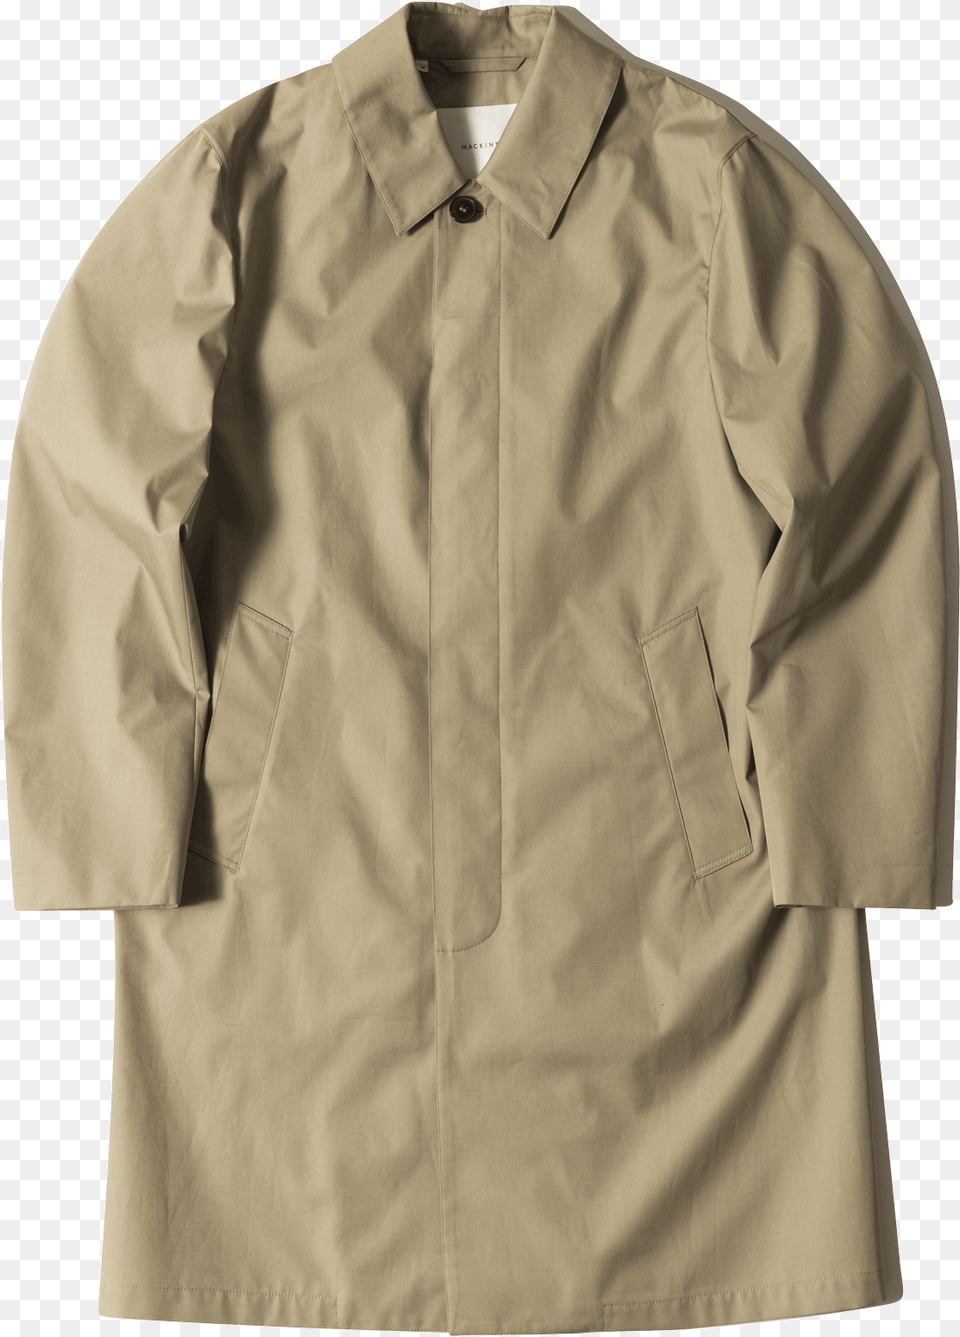 Gents Gm 001bs Overcoat, Clothing, Coat, Shirt, Lab Coat Png